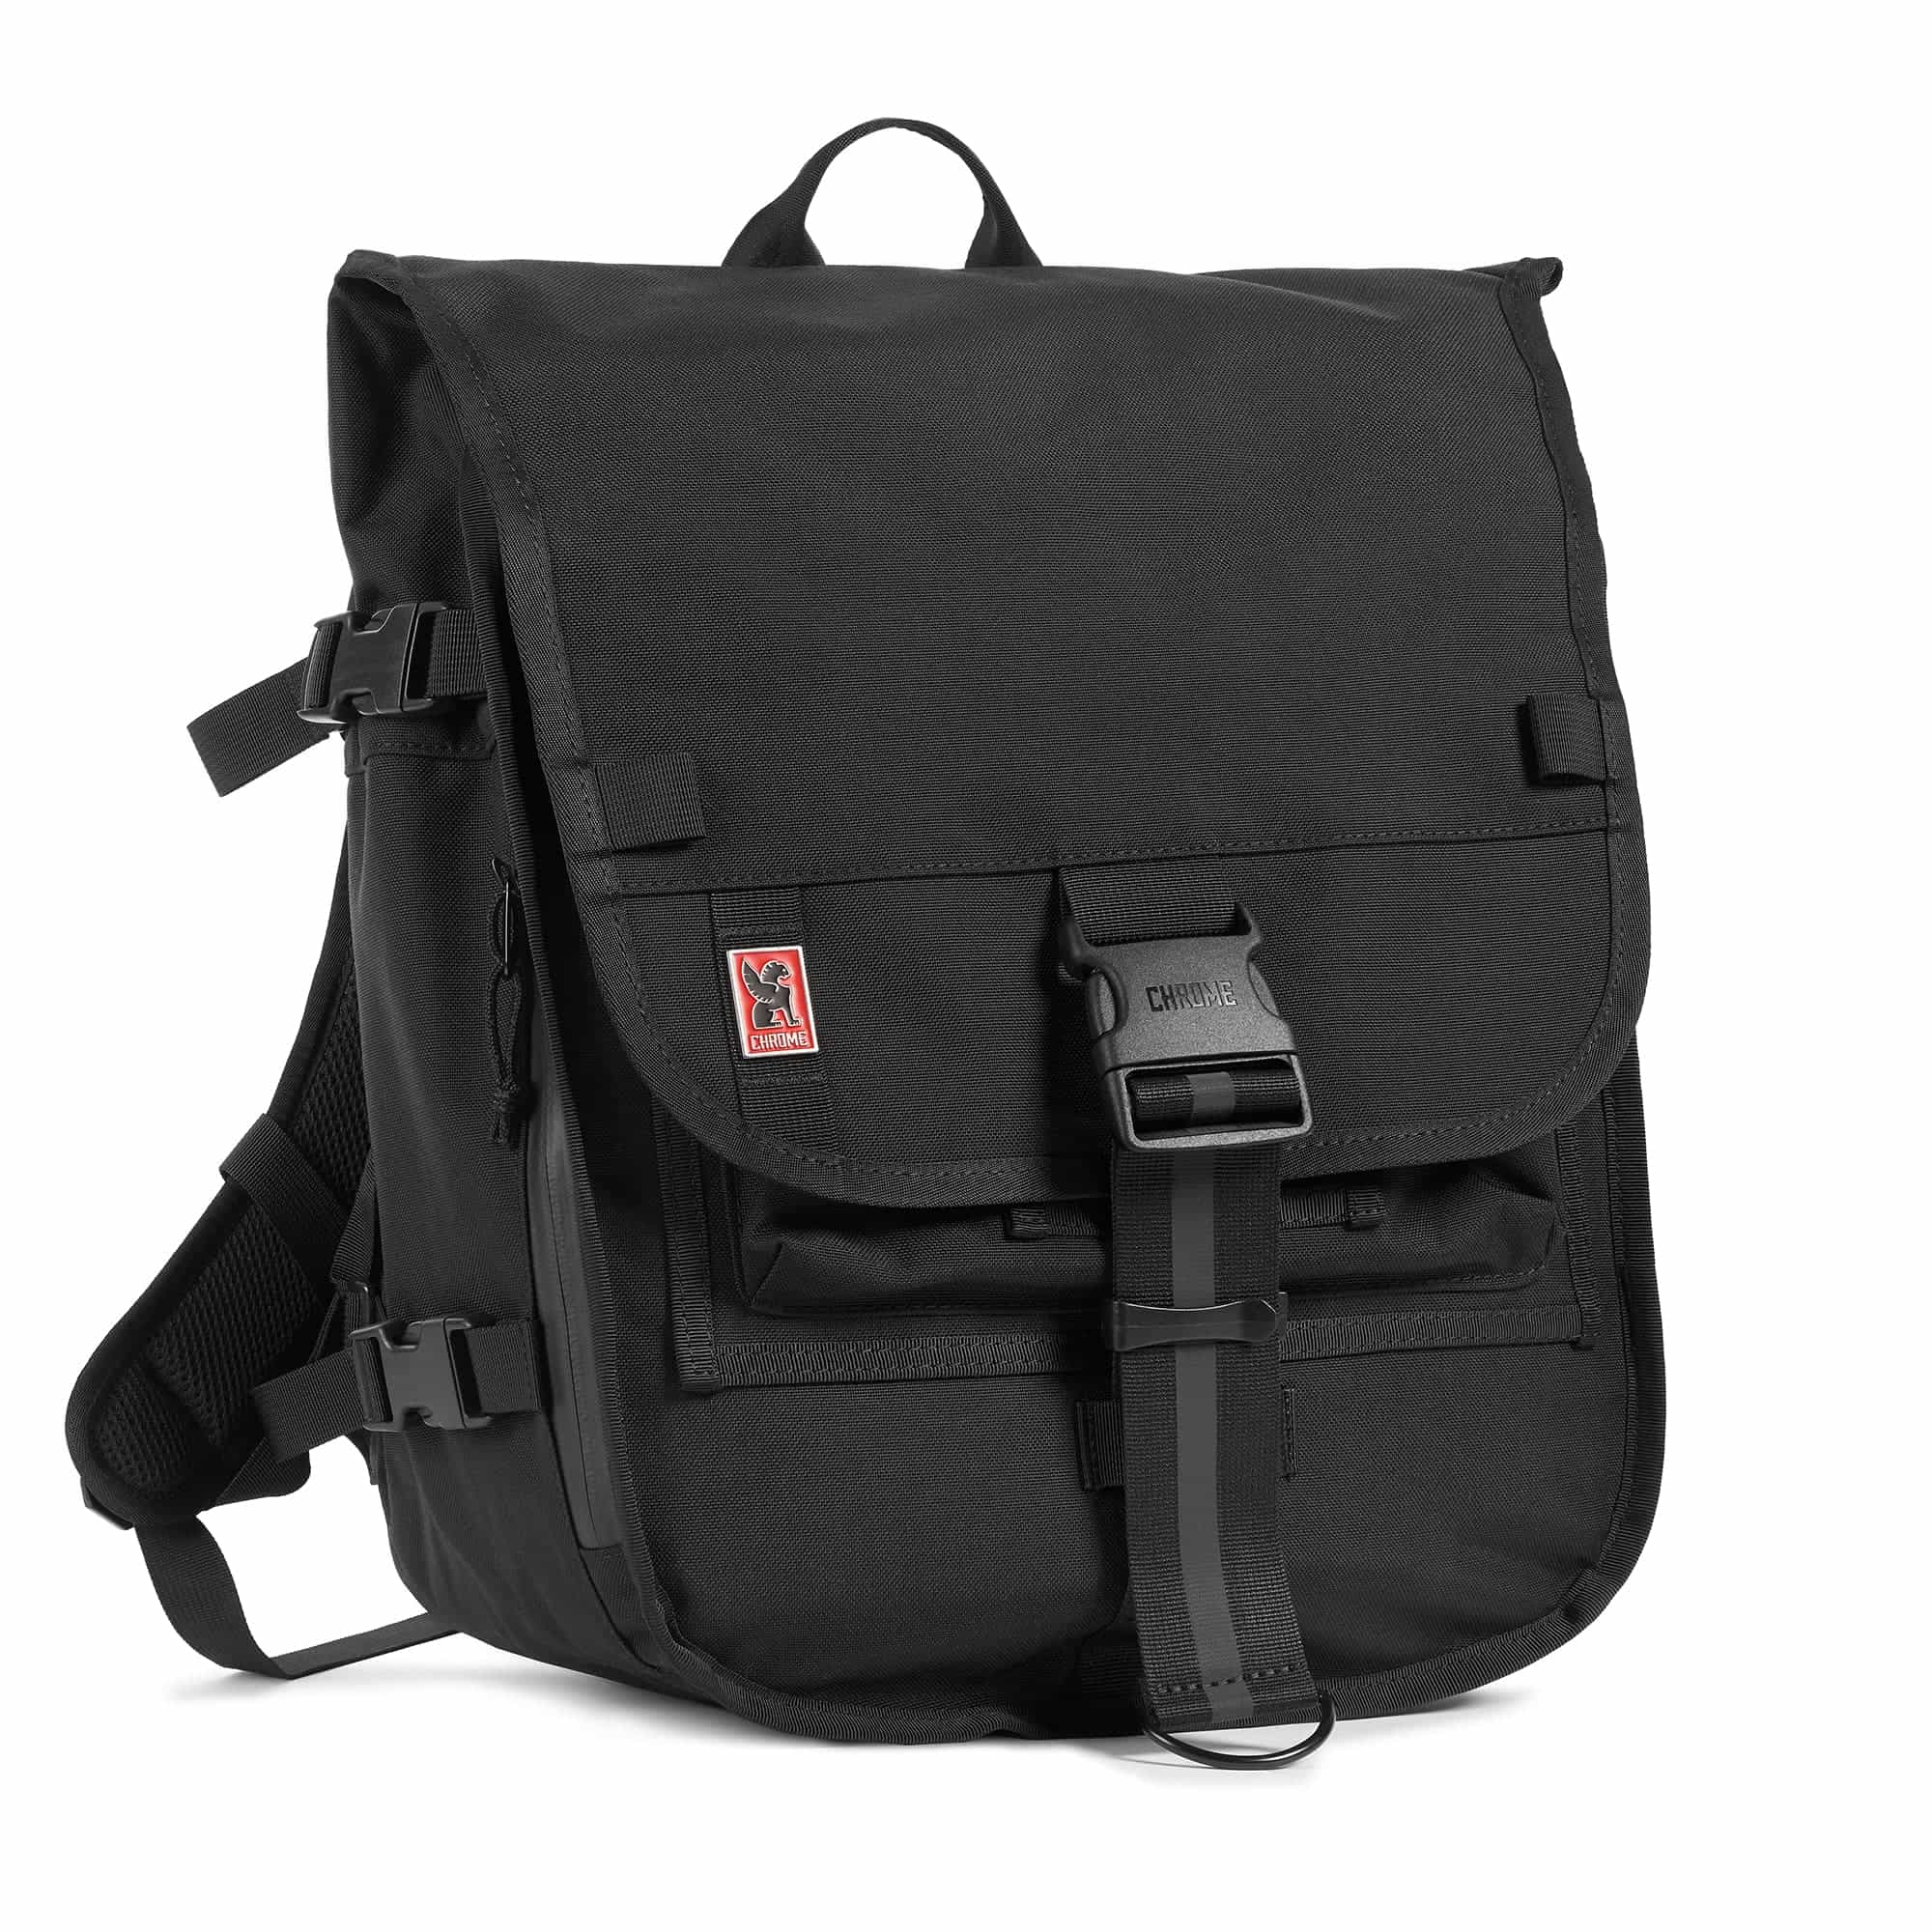 Warsaw medium size flap backpack in black